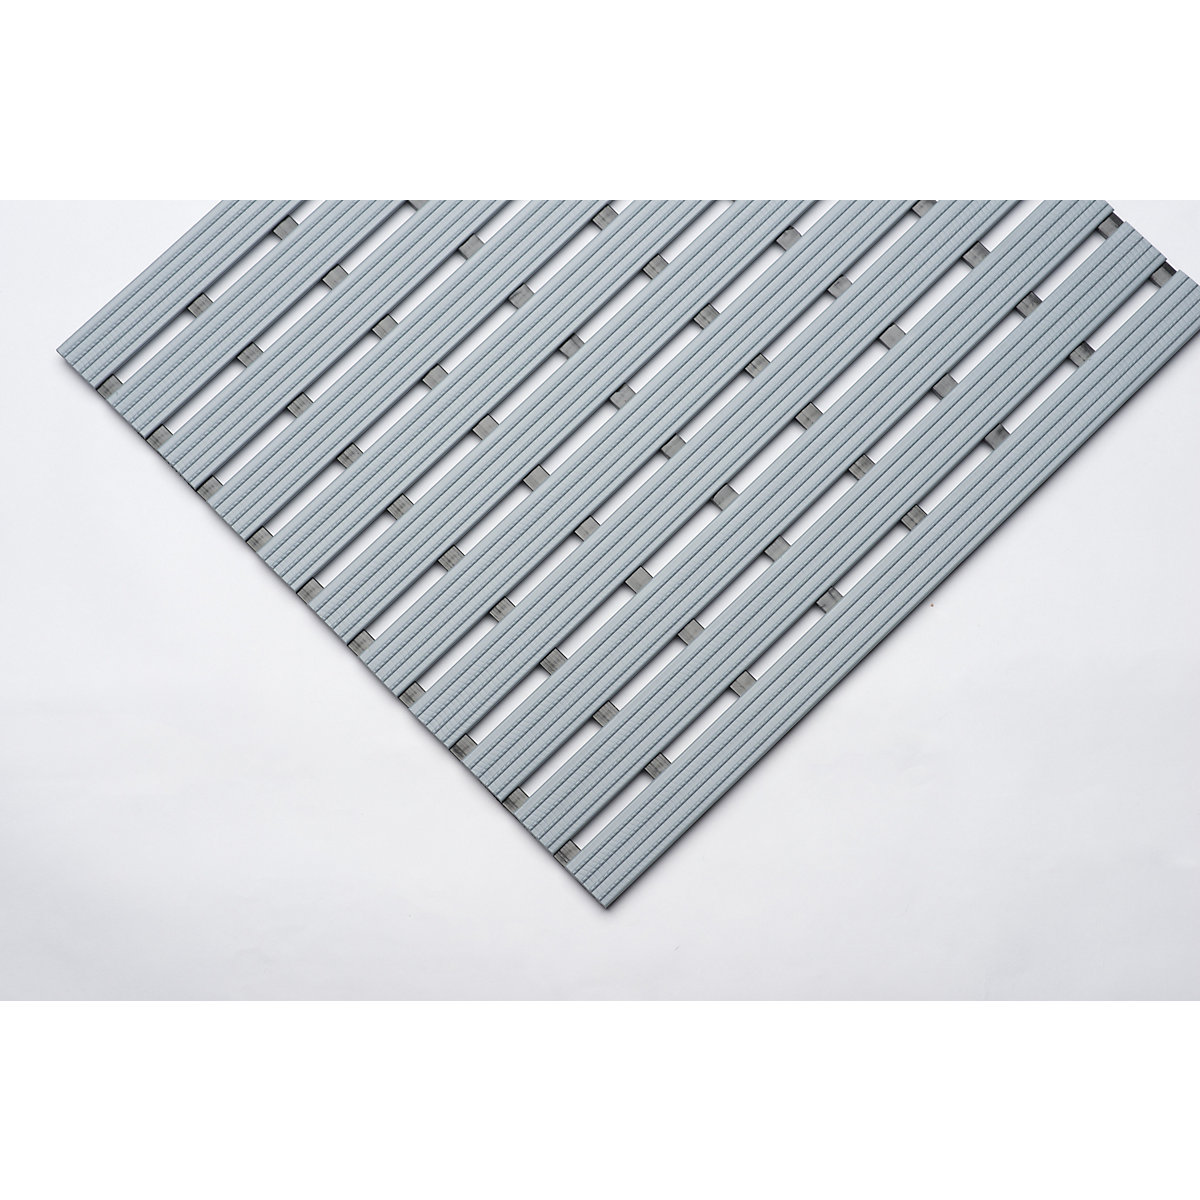 PVC profilová rohožka, na bežný m, pojazdná plocha z tvrdého PVC, protišmyková, šírka 600 mm, šedá